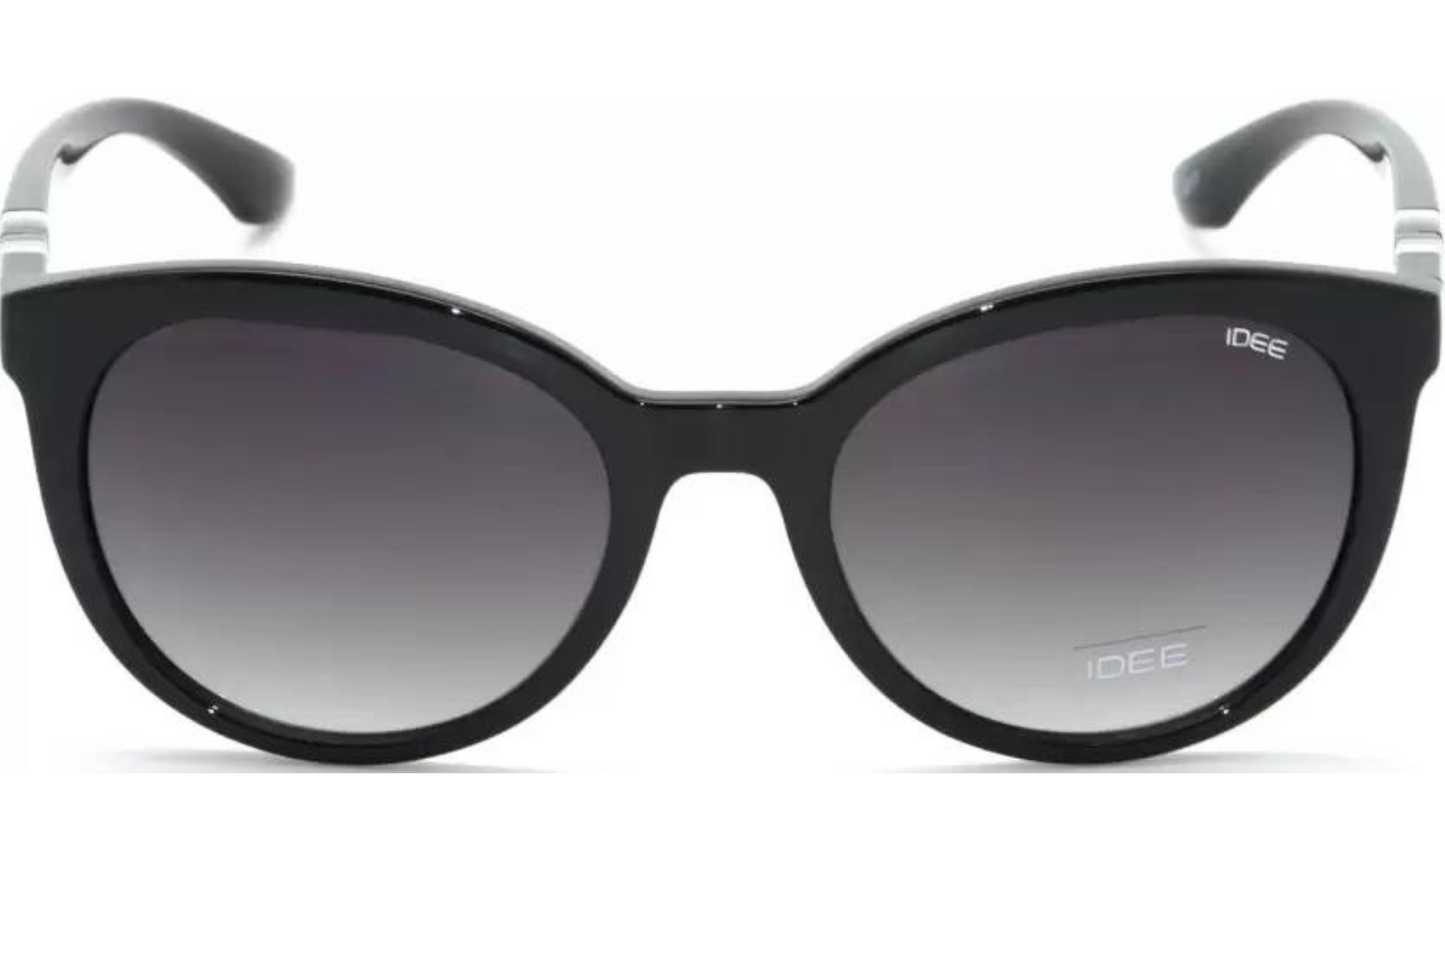 IDEE Sunglasses S2267 C1